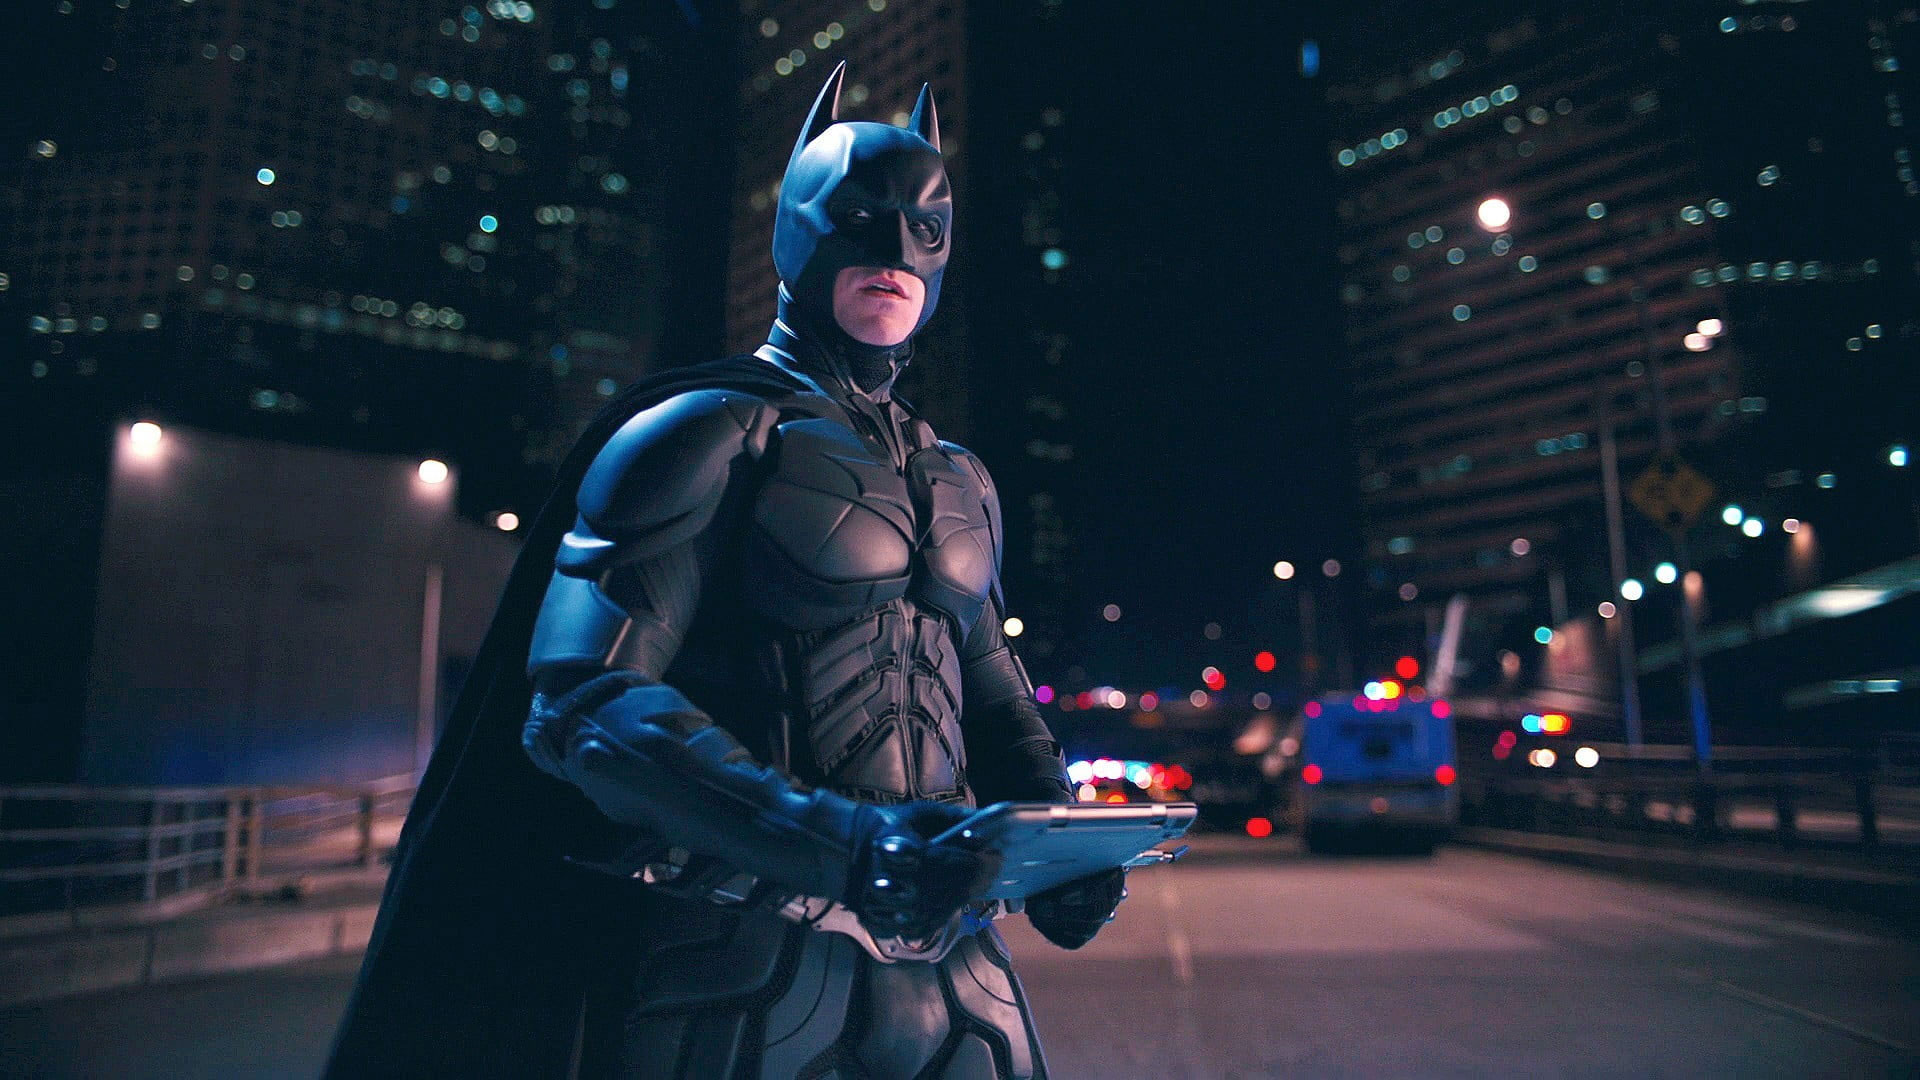 Wallpaper Batman, The Dark Knight Rises, Movies, City - Wallpaperforu